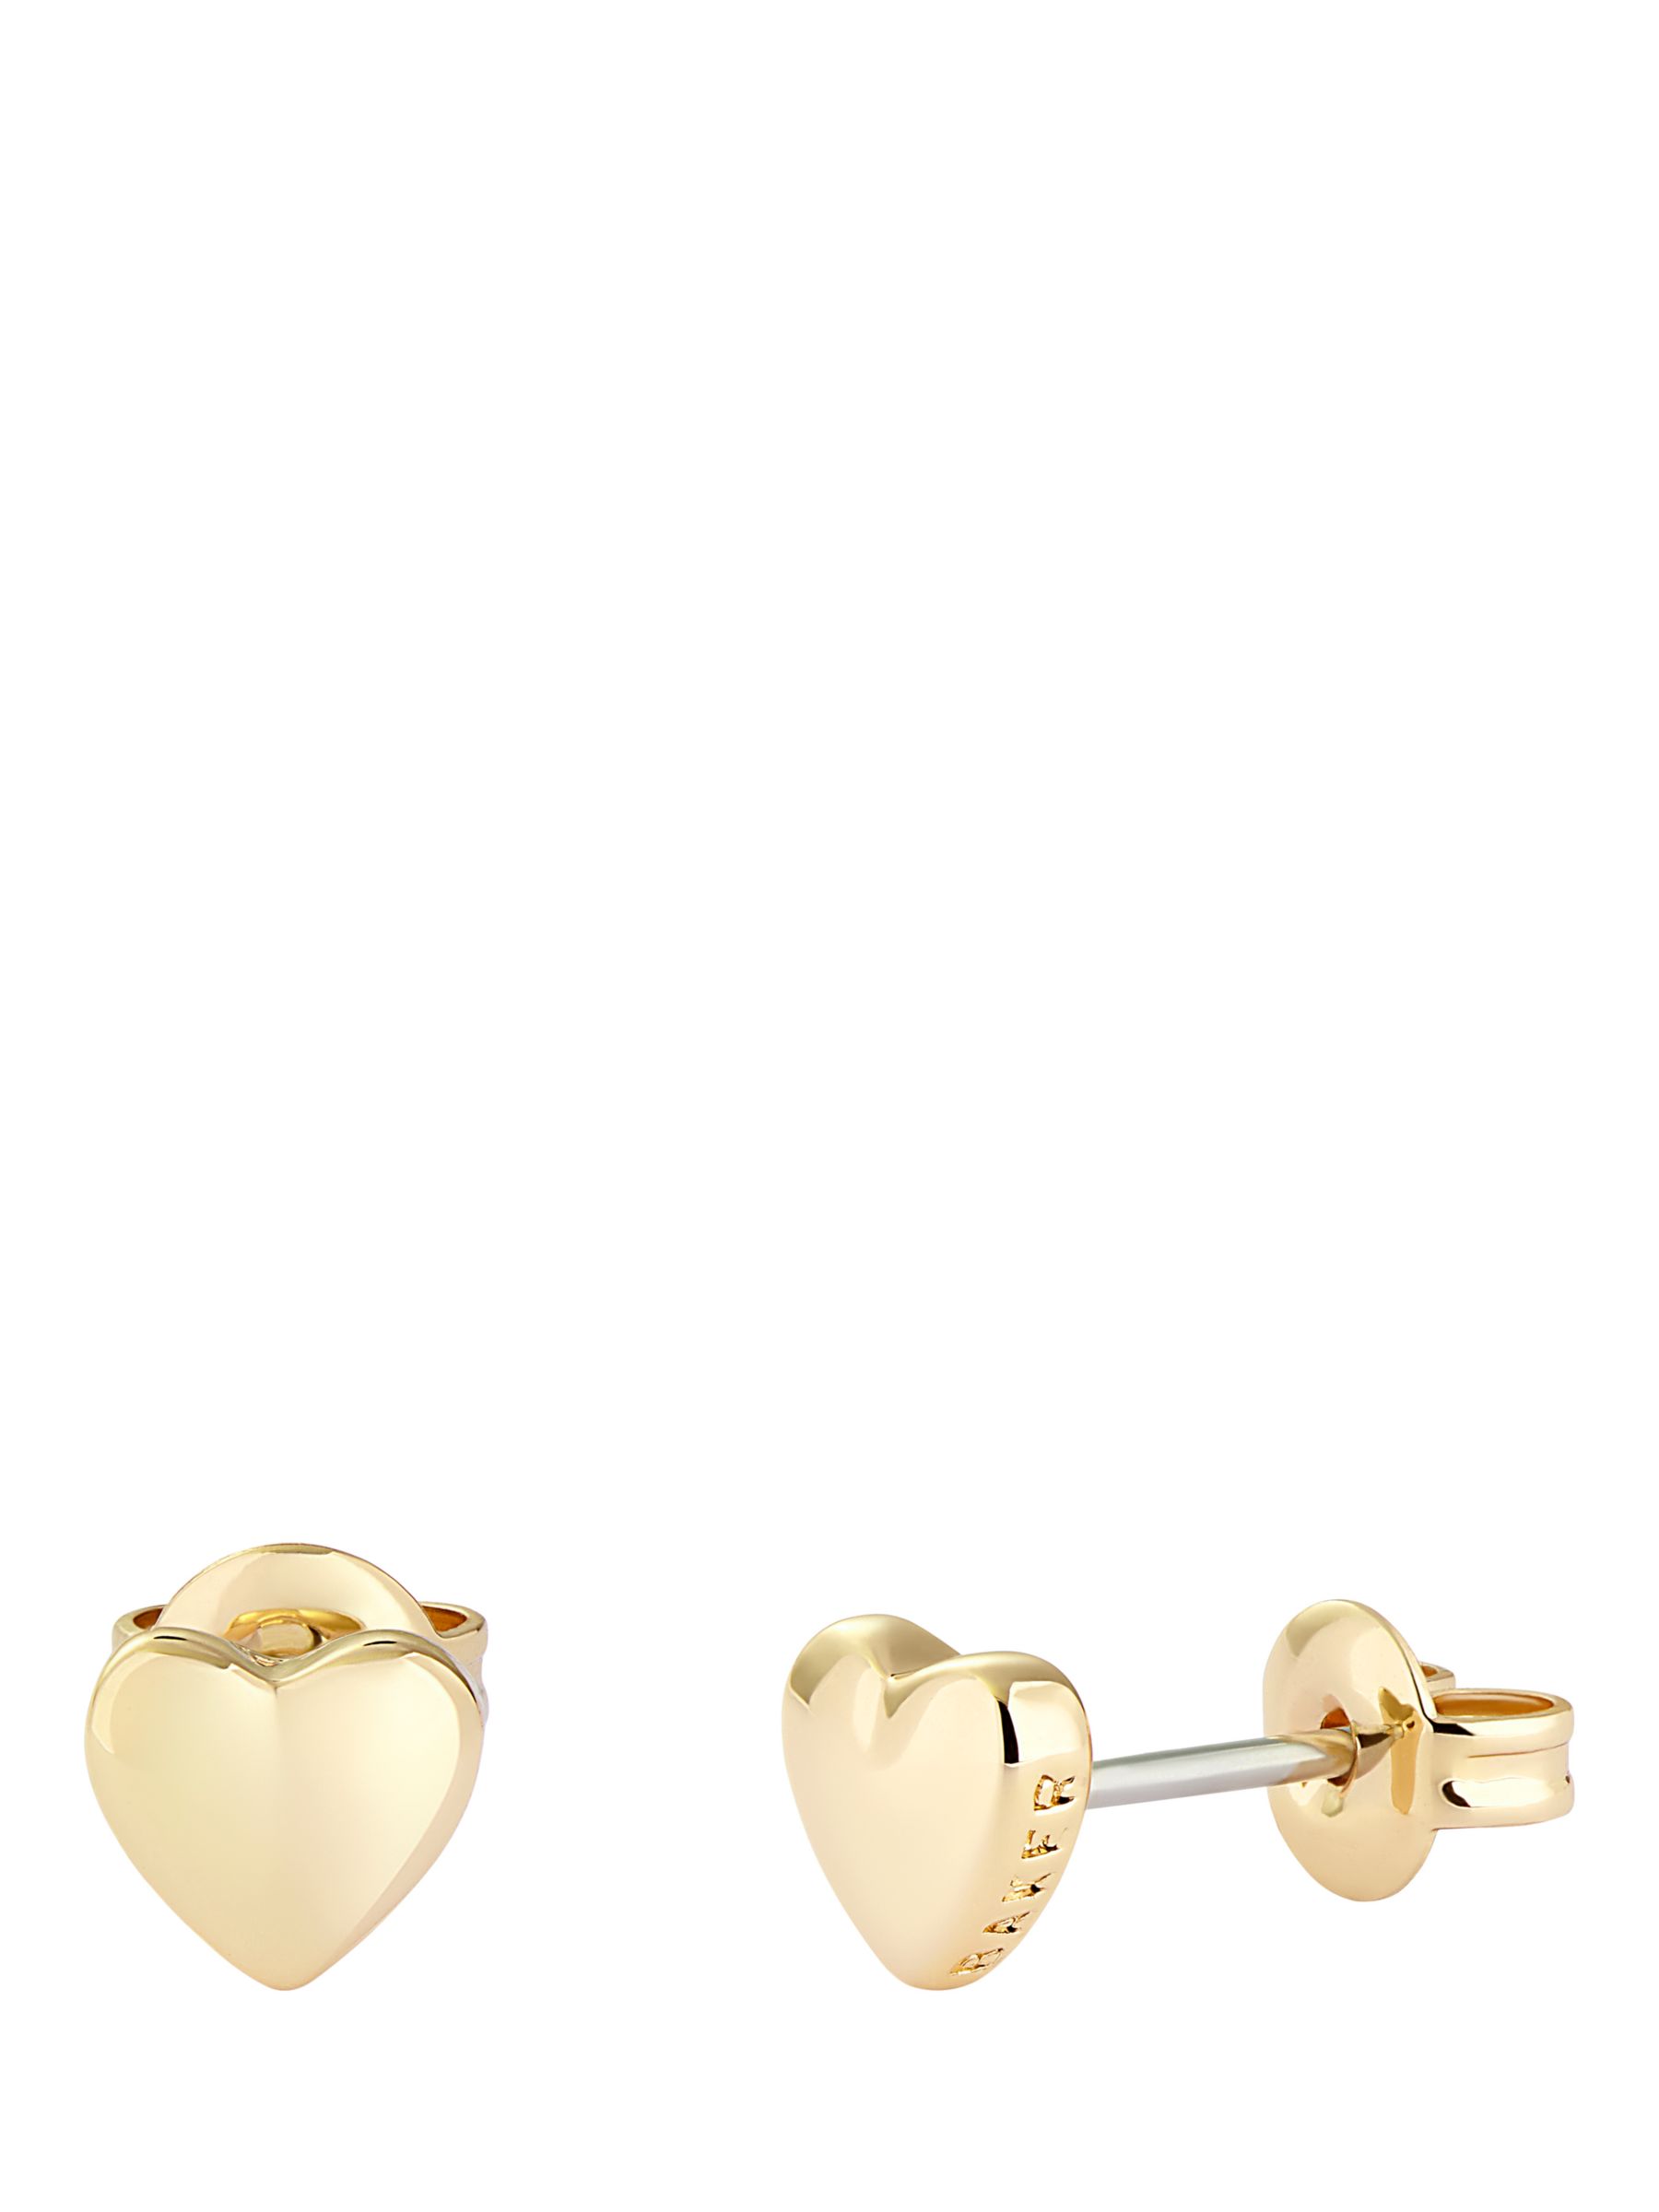 Ted Baker Engraved Heart Stud Earrings, Gold at John Lewis & Partners